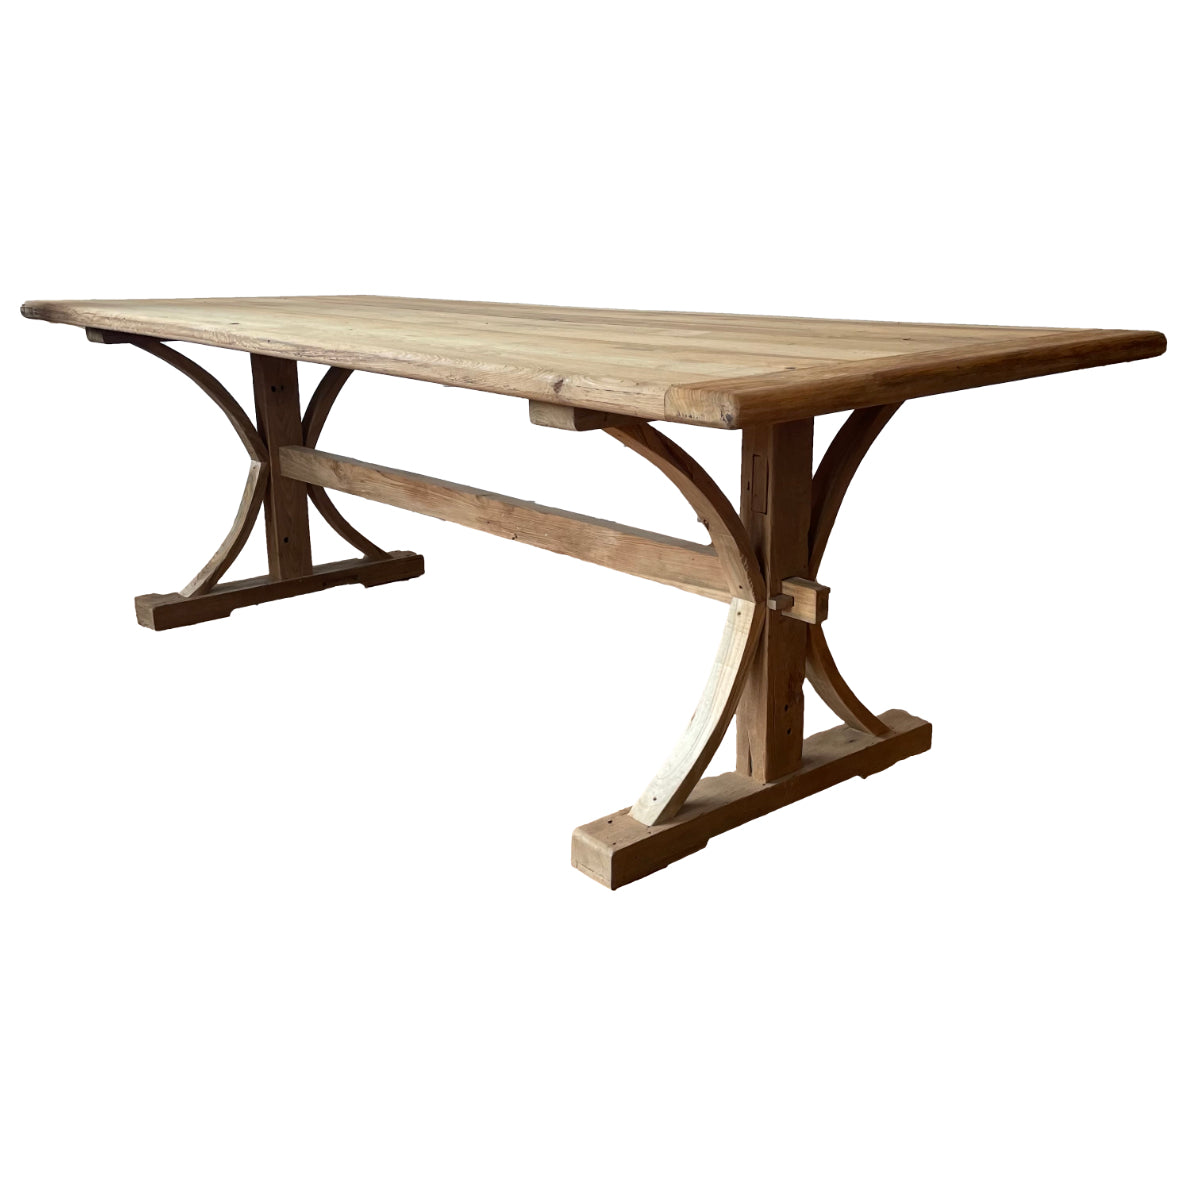 Teak Timber Curved Cross Leg Dining Table 2.5m x 1m